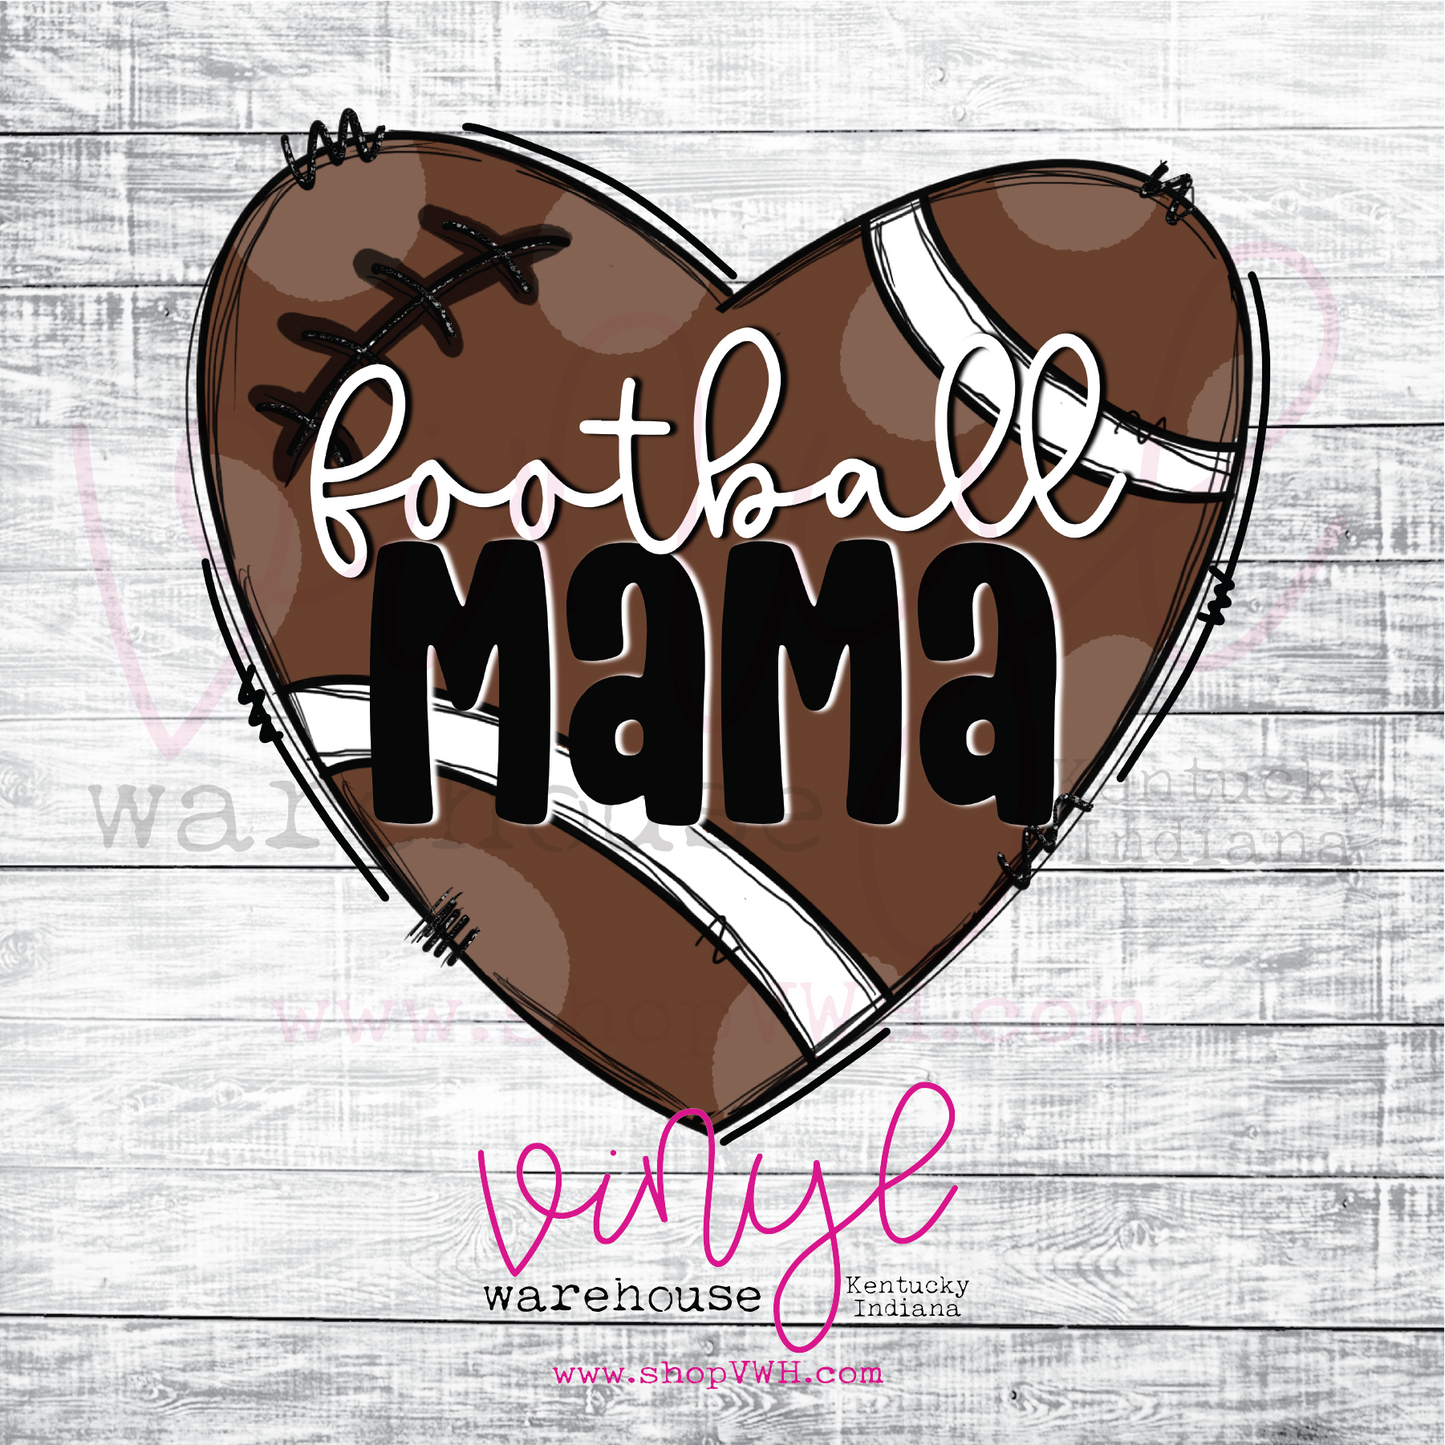 Football Mama (Heart) - Heat Transfer Print